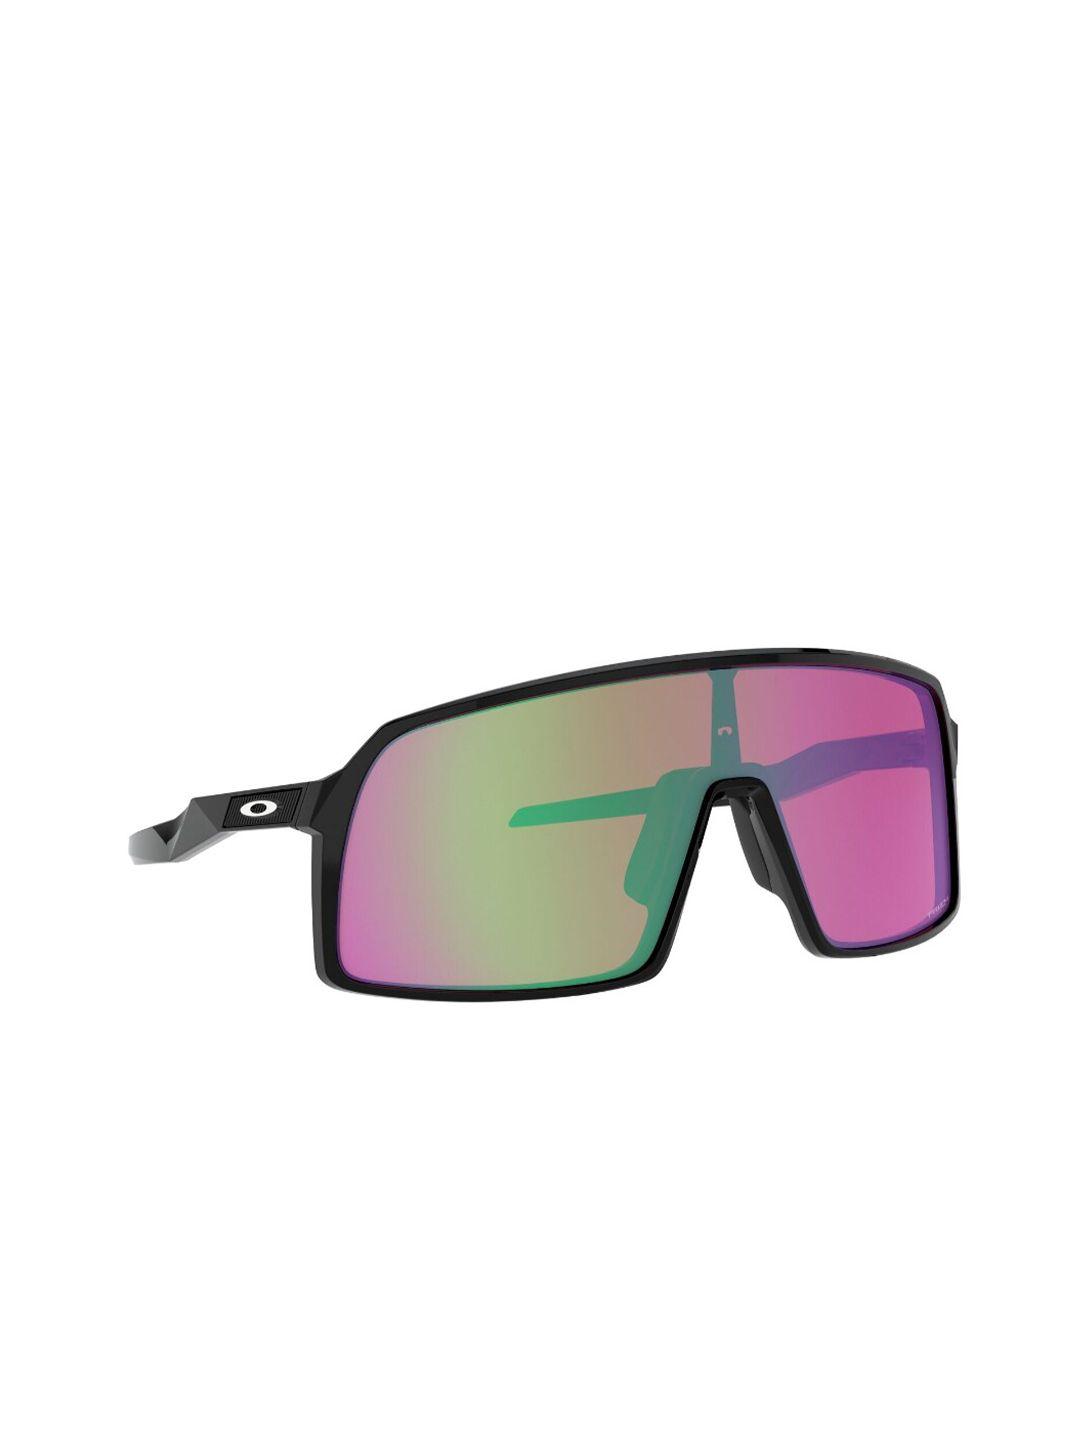 oakley-men-lens-&-shield-sunglasses-with-uv-protected-lens